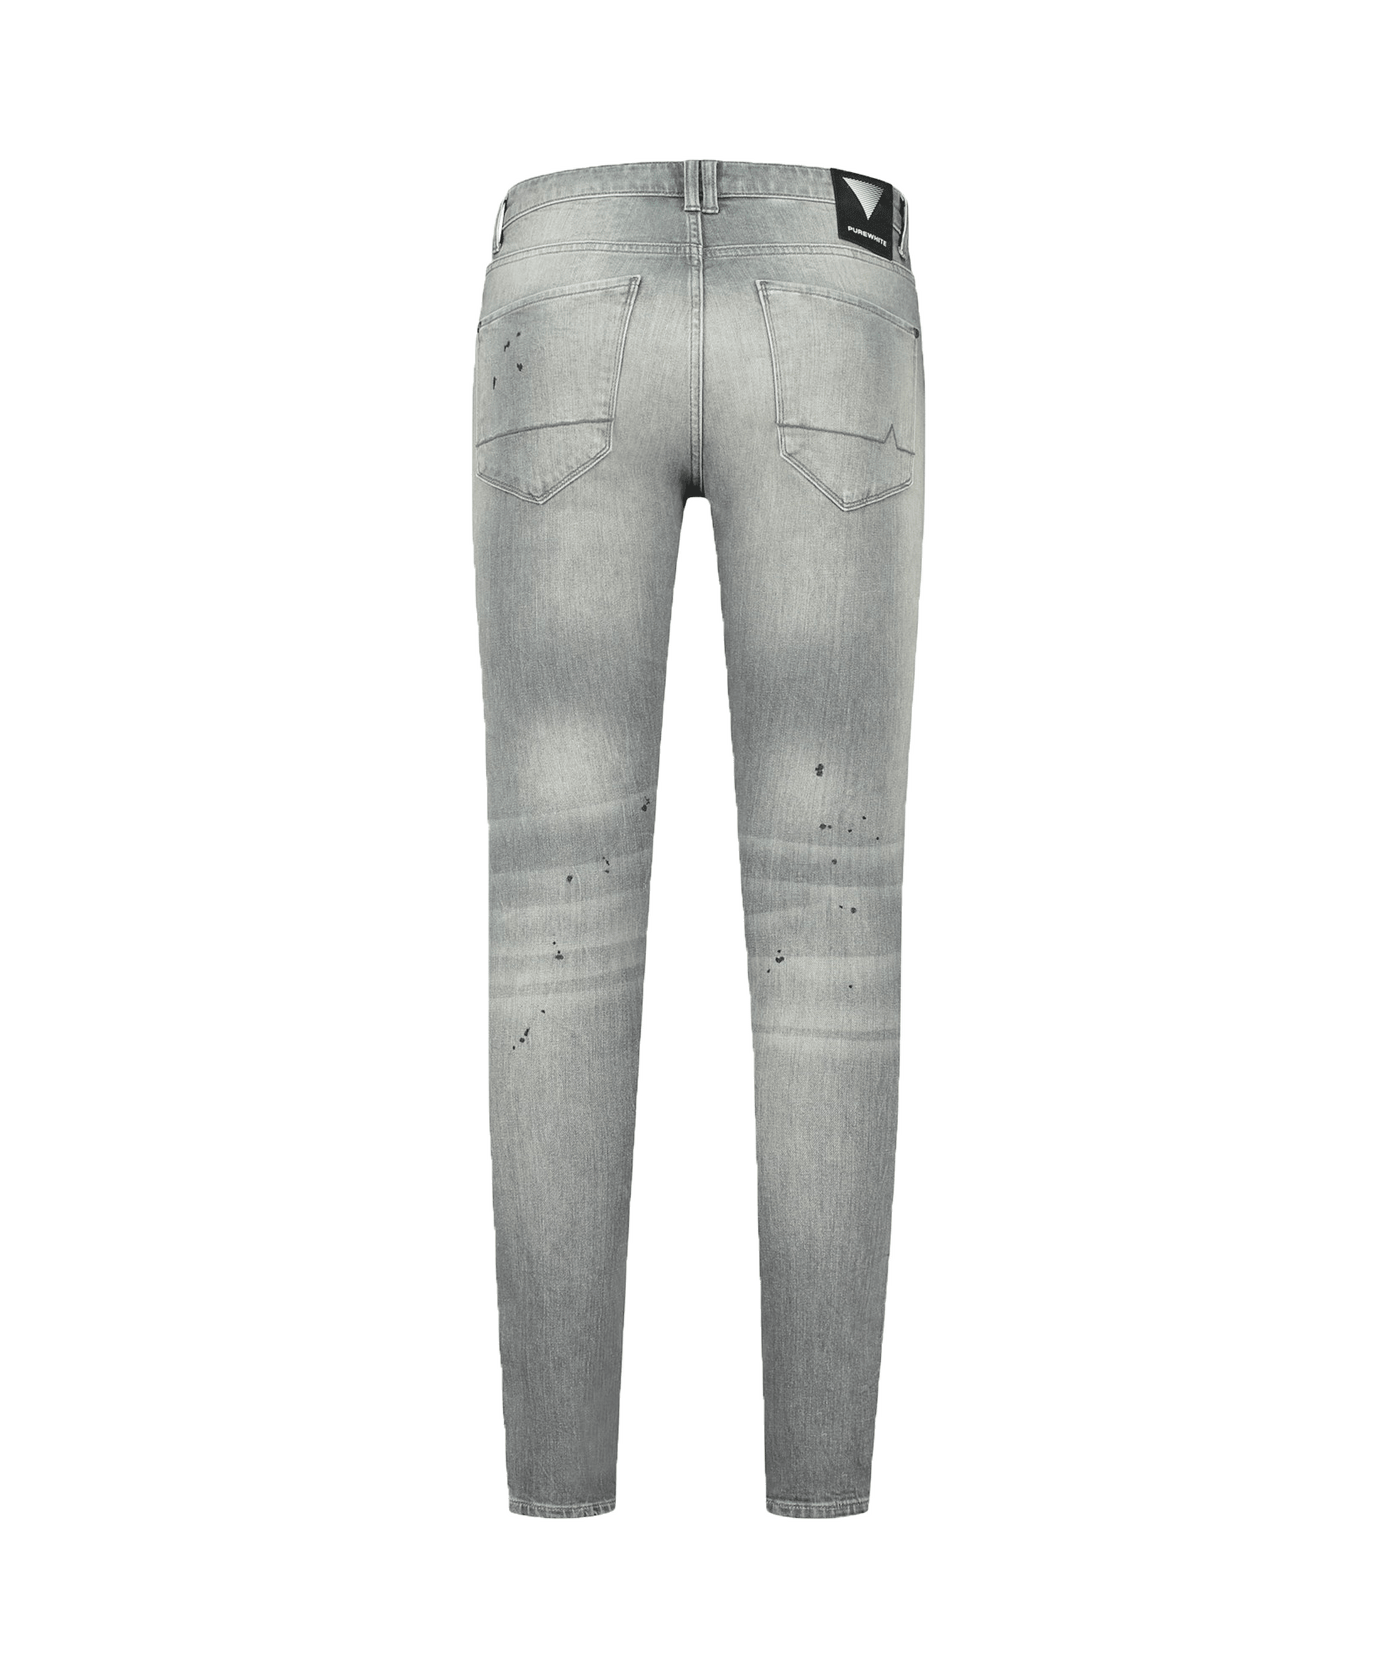 PureWhite - The Dylan W1130 - Jeans Denim Light Grey